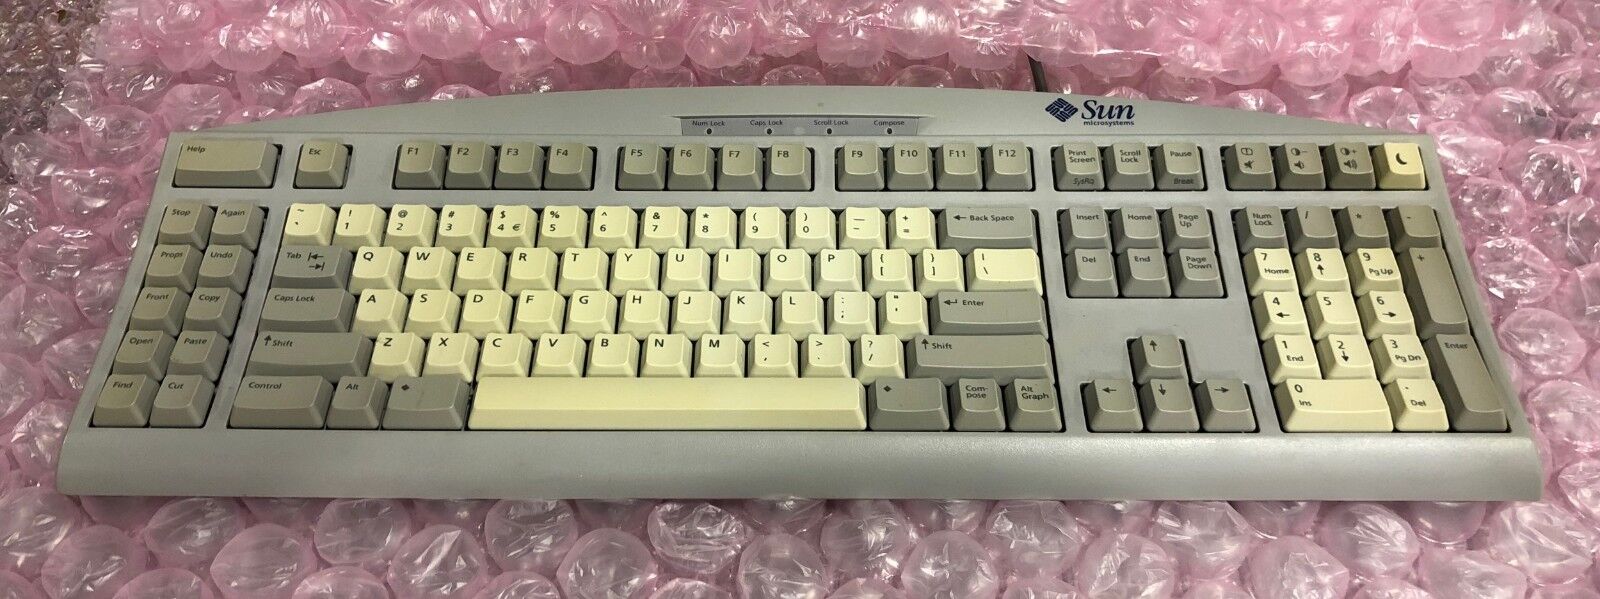 320-1271 - Sun Type-6 USB Keyboard